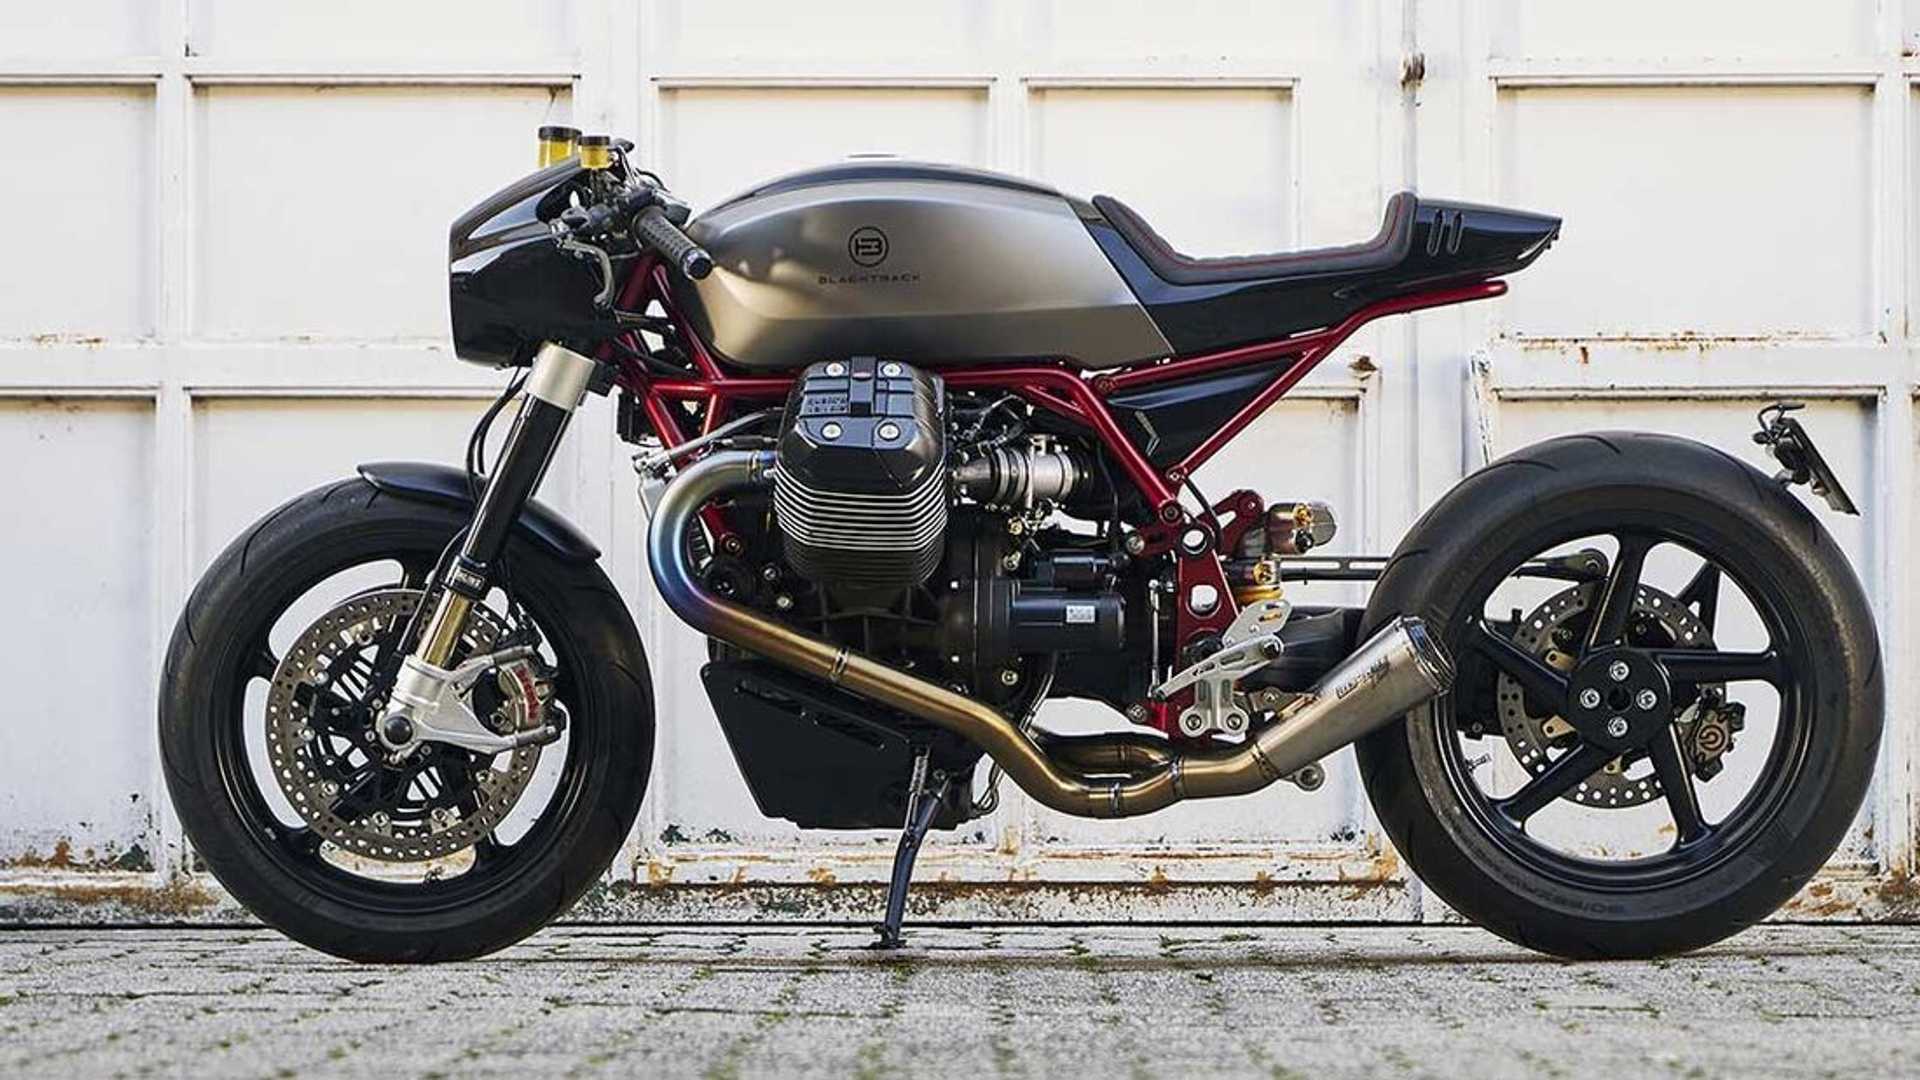 A view of the custom Moto Guzzi Griso that Sasha Lakic from Blacktrack motors created